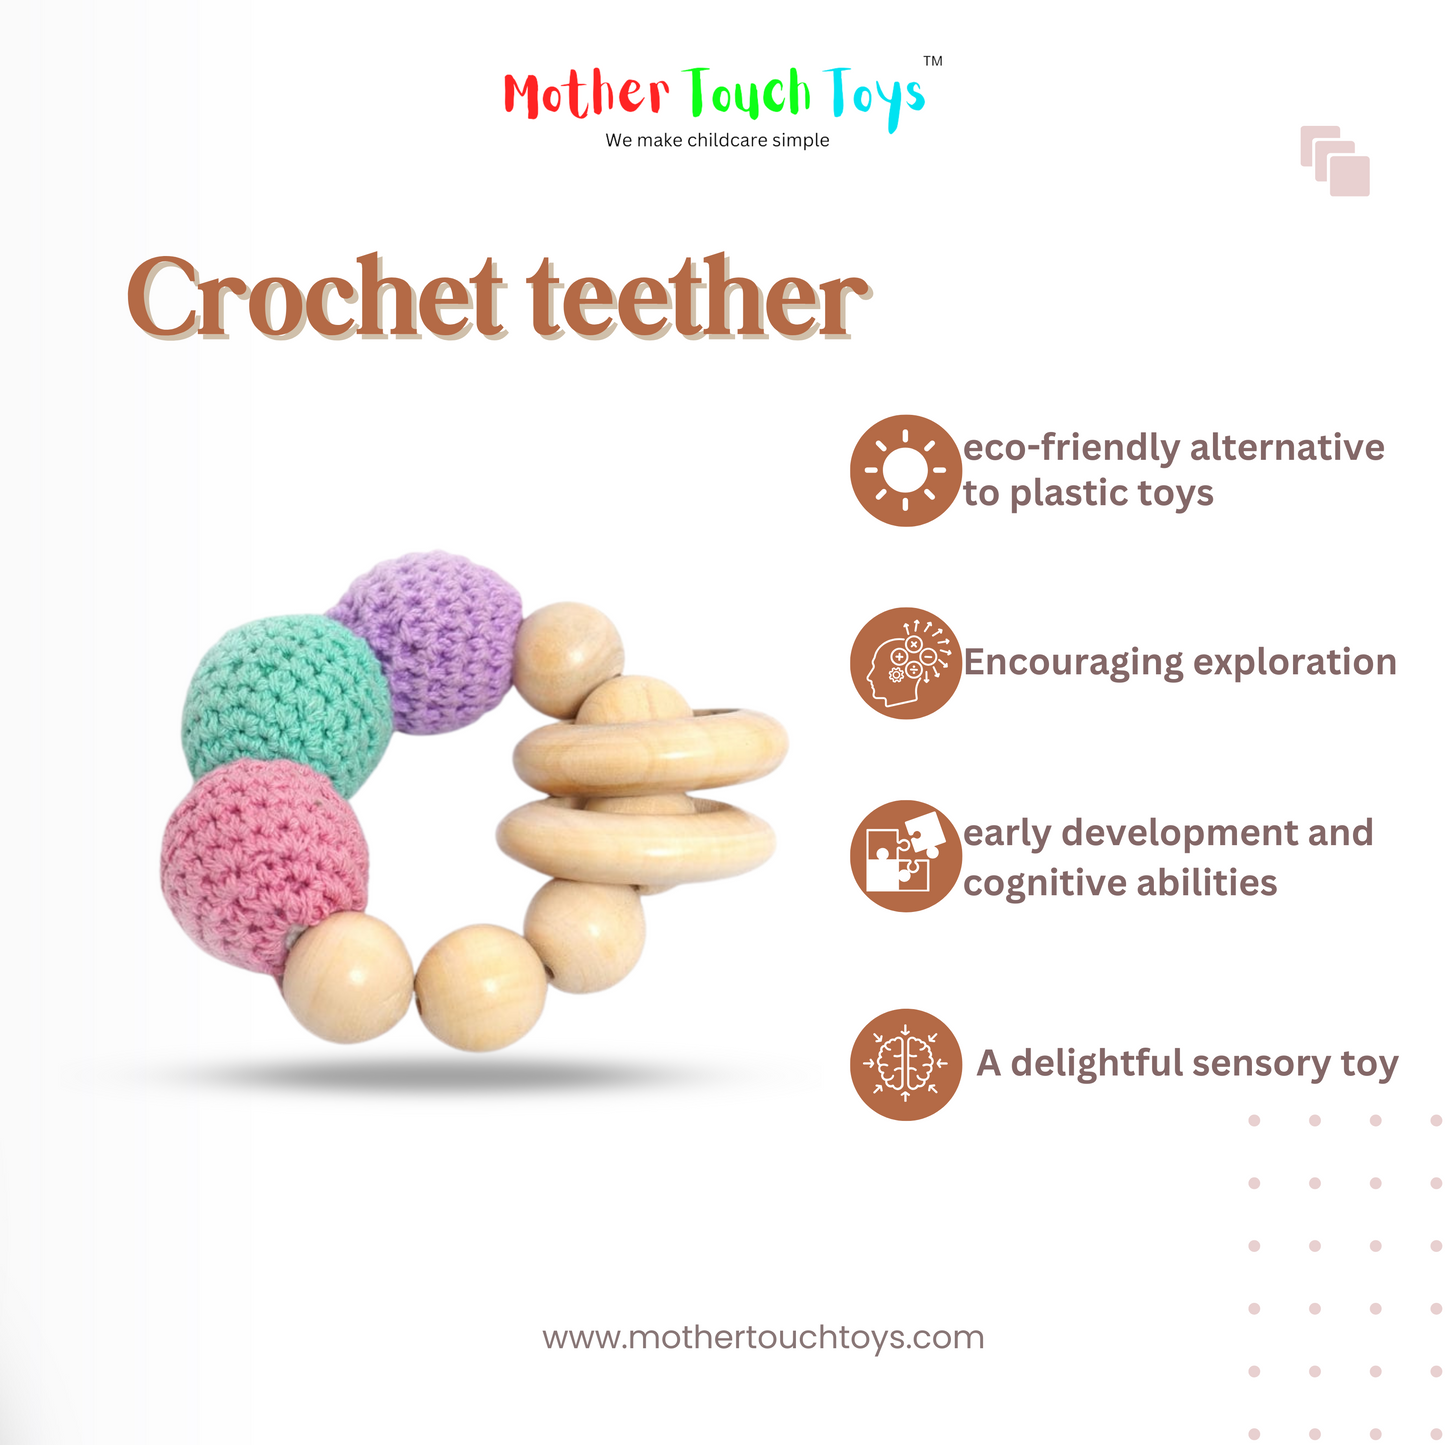 Crochet teether